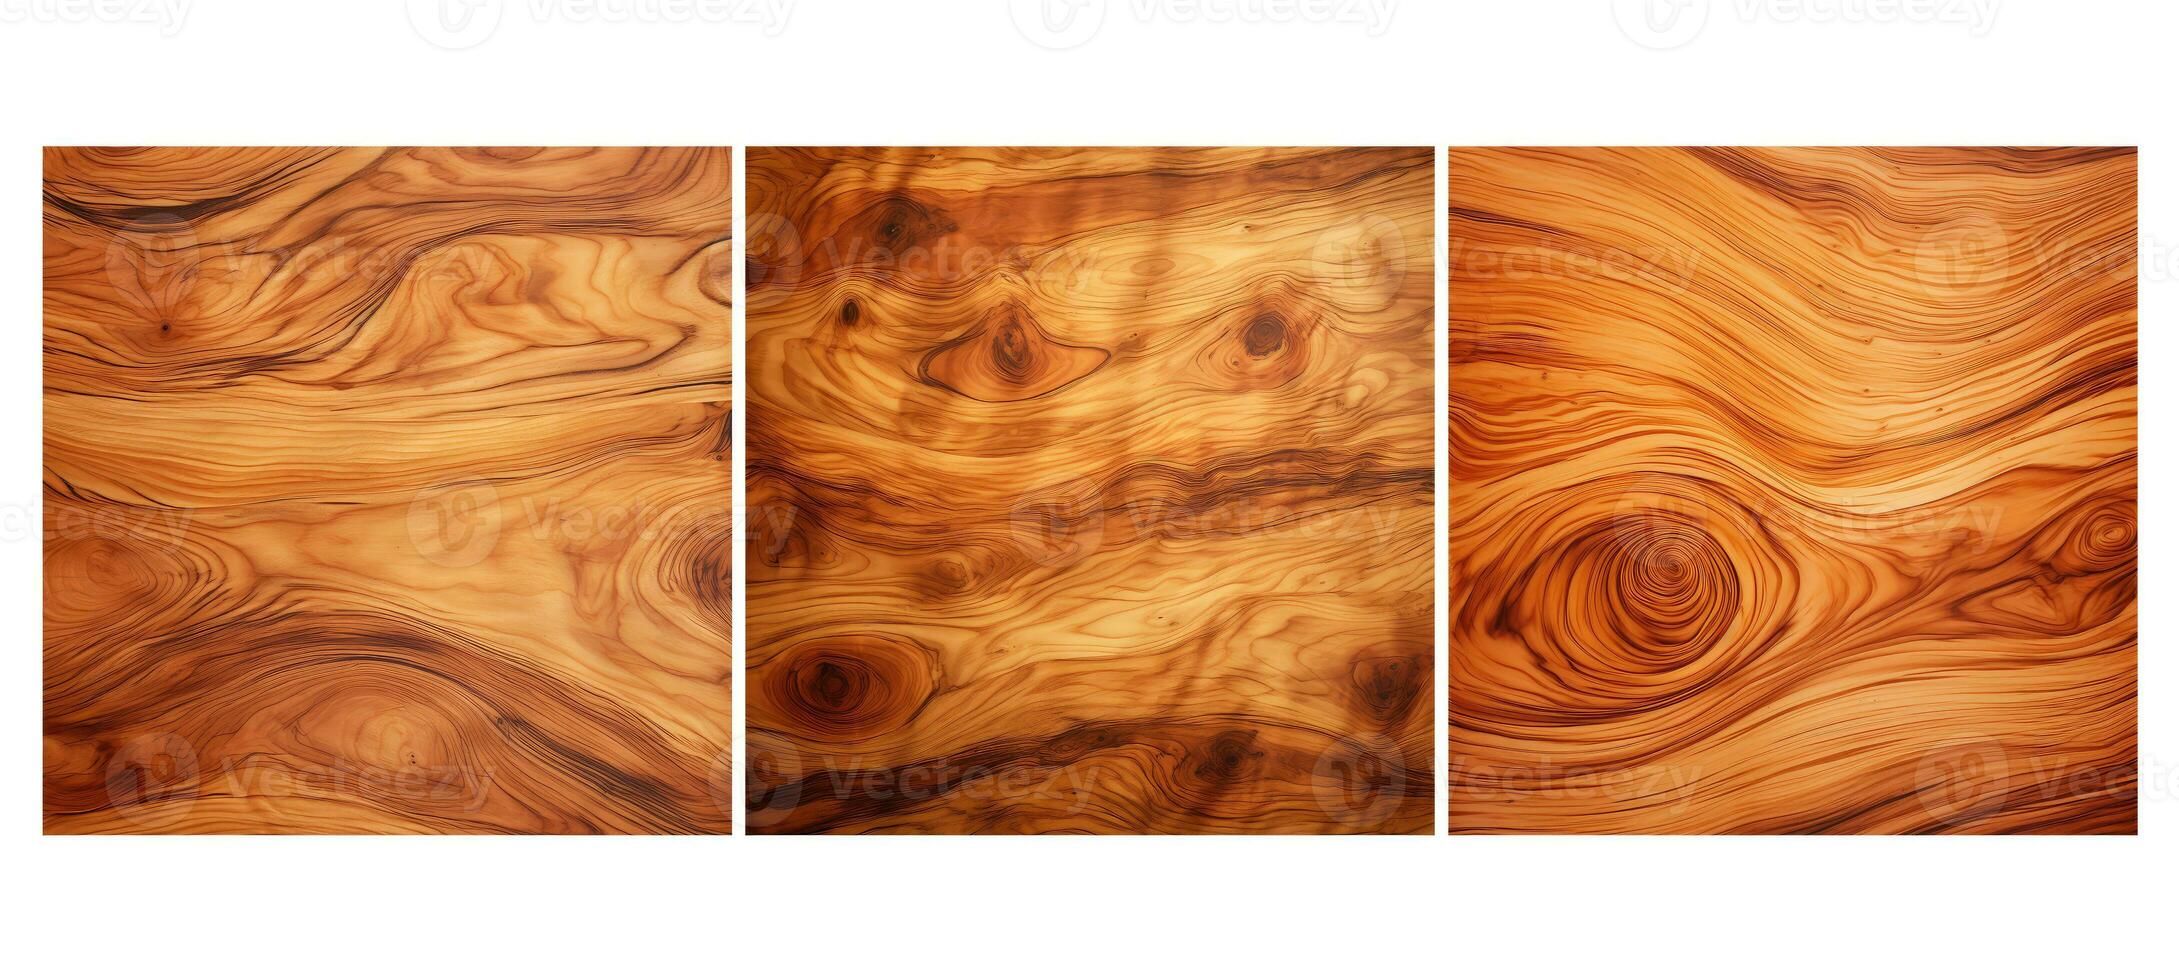 surface yew wood texture grain photo